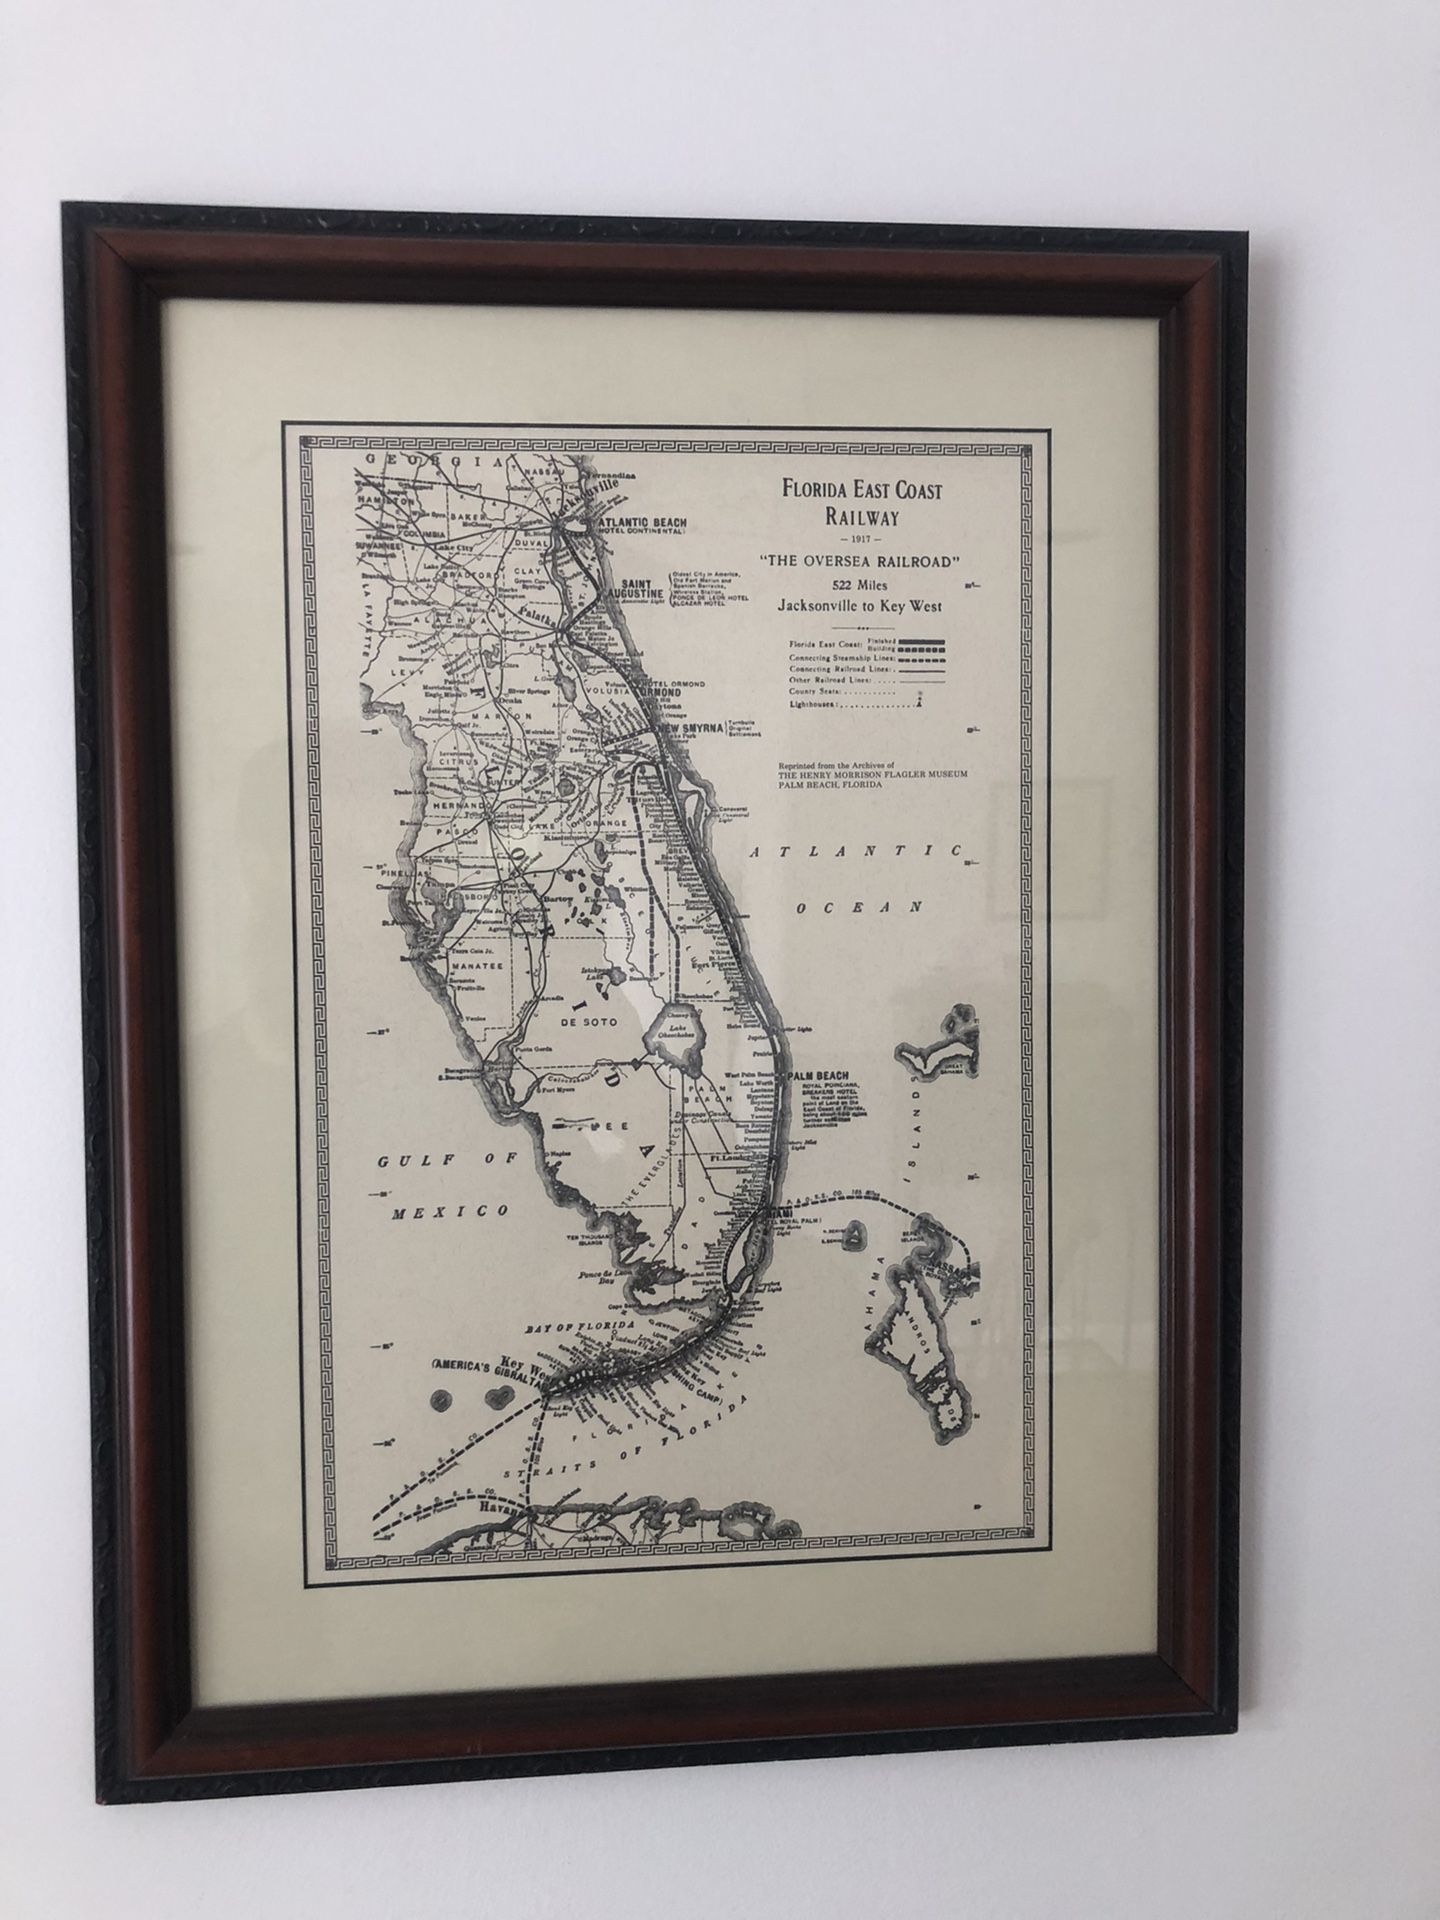 Florida East Coast Railway Map Frame 18”x24”